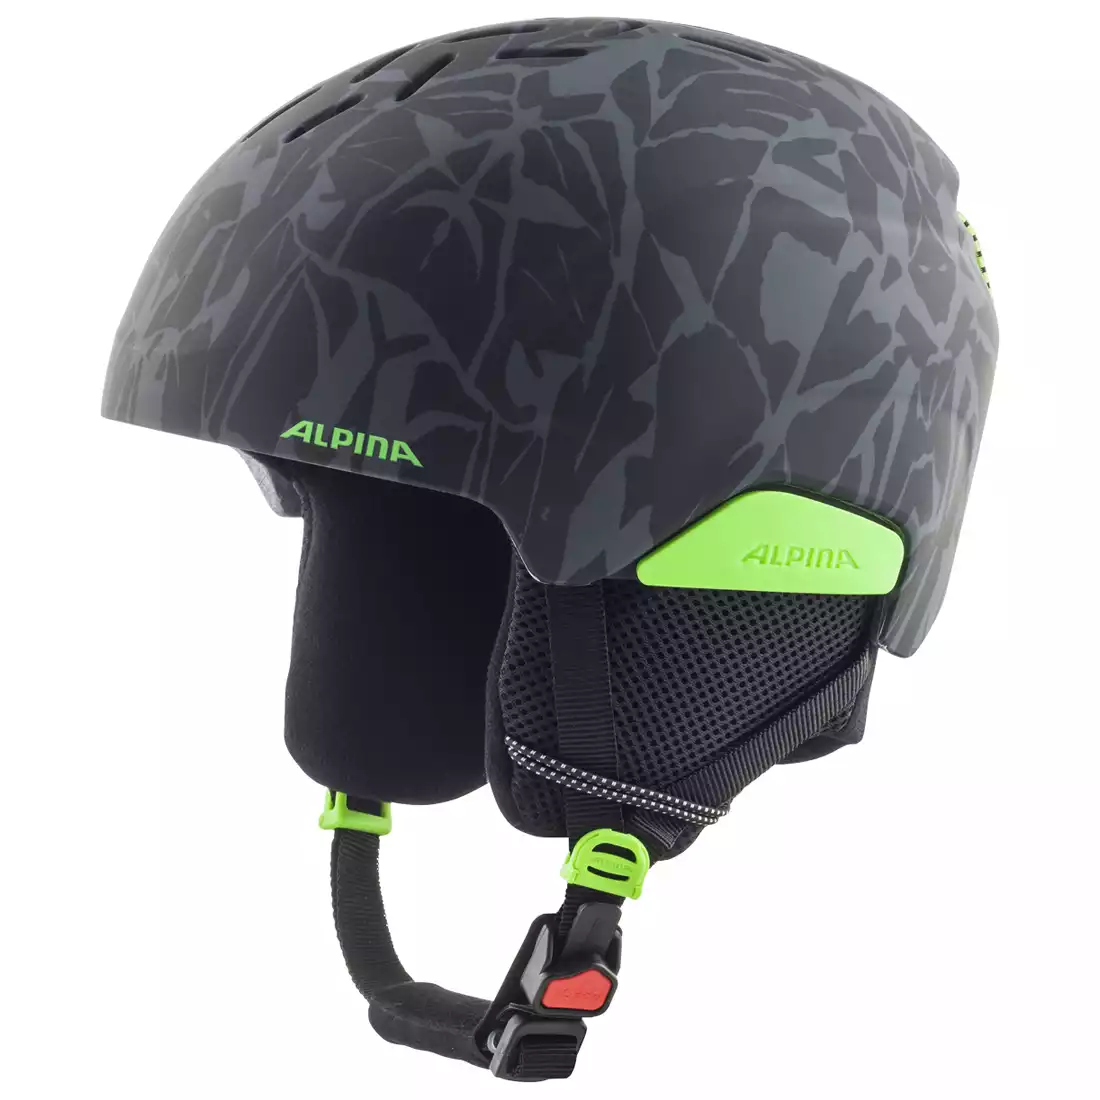 ALPINA PIZI children's ski/snowboard helmet, black-green camo matt